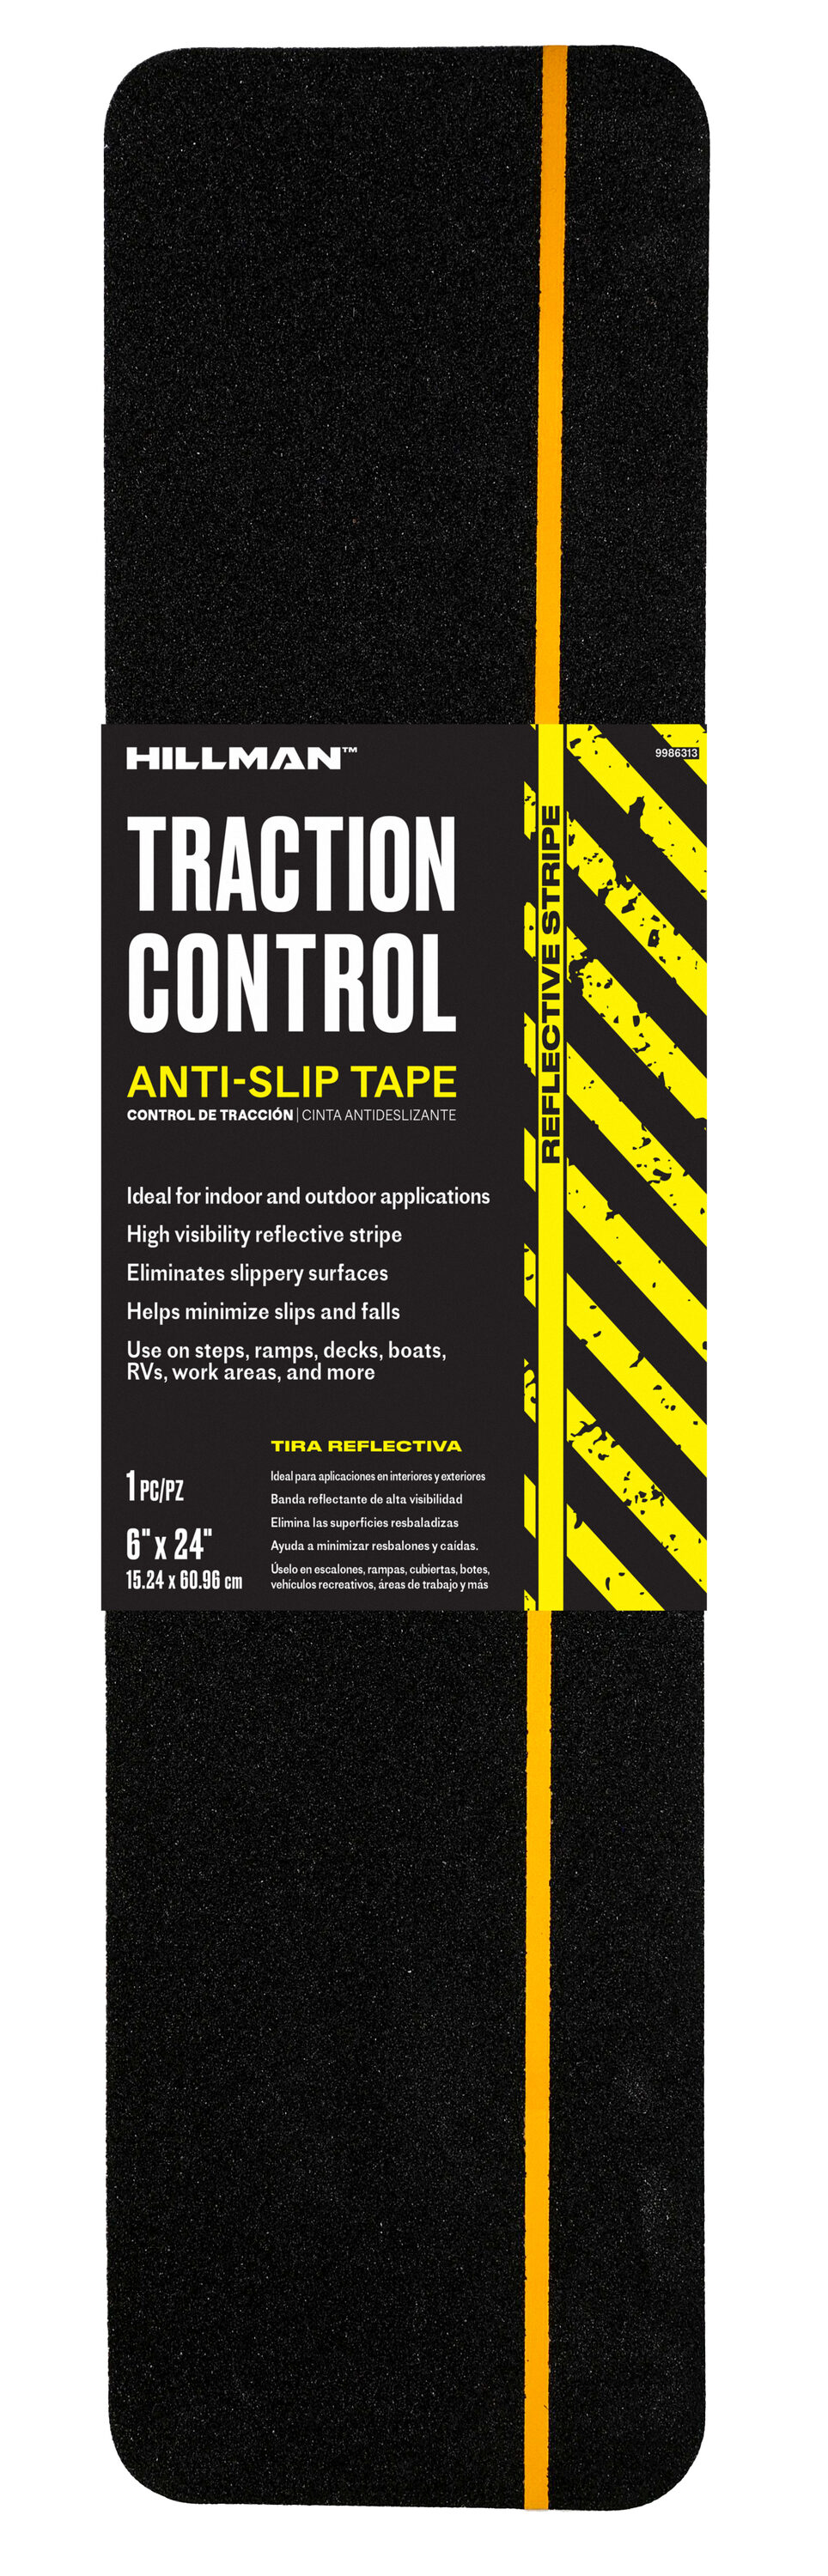 Anti-Slip Tape at